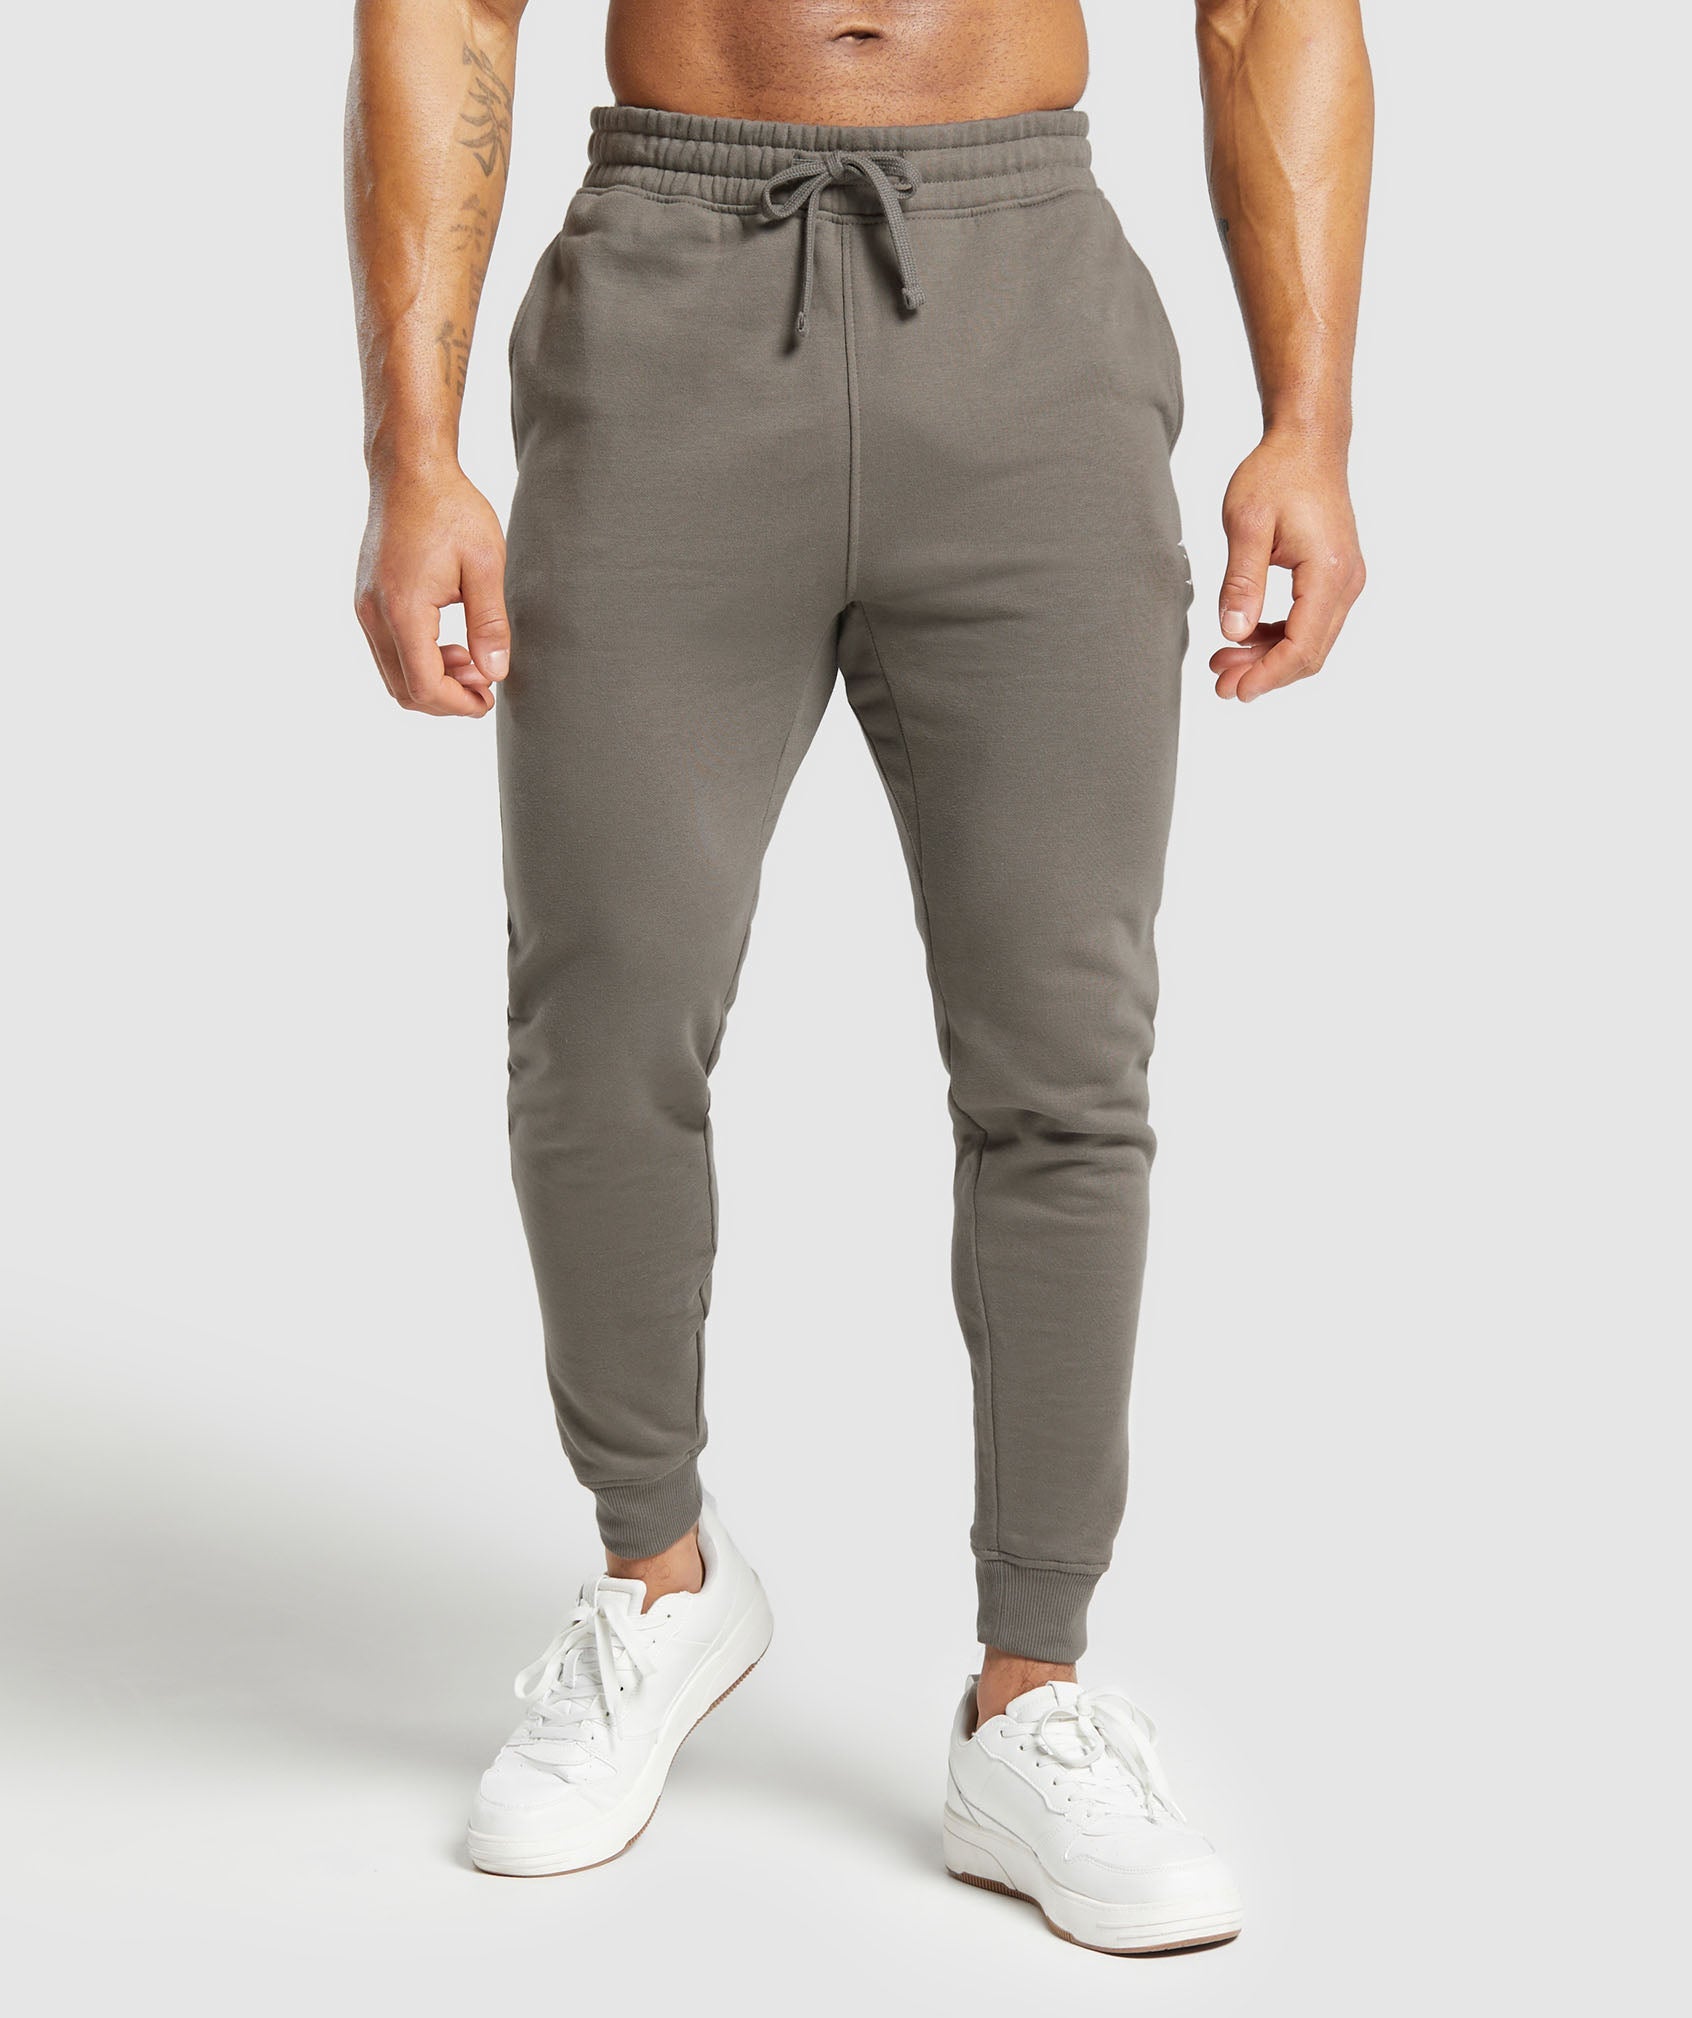 Grey Gymshark joggers never worn size S. €26 incl - Depop